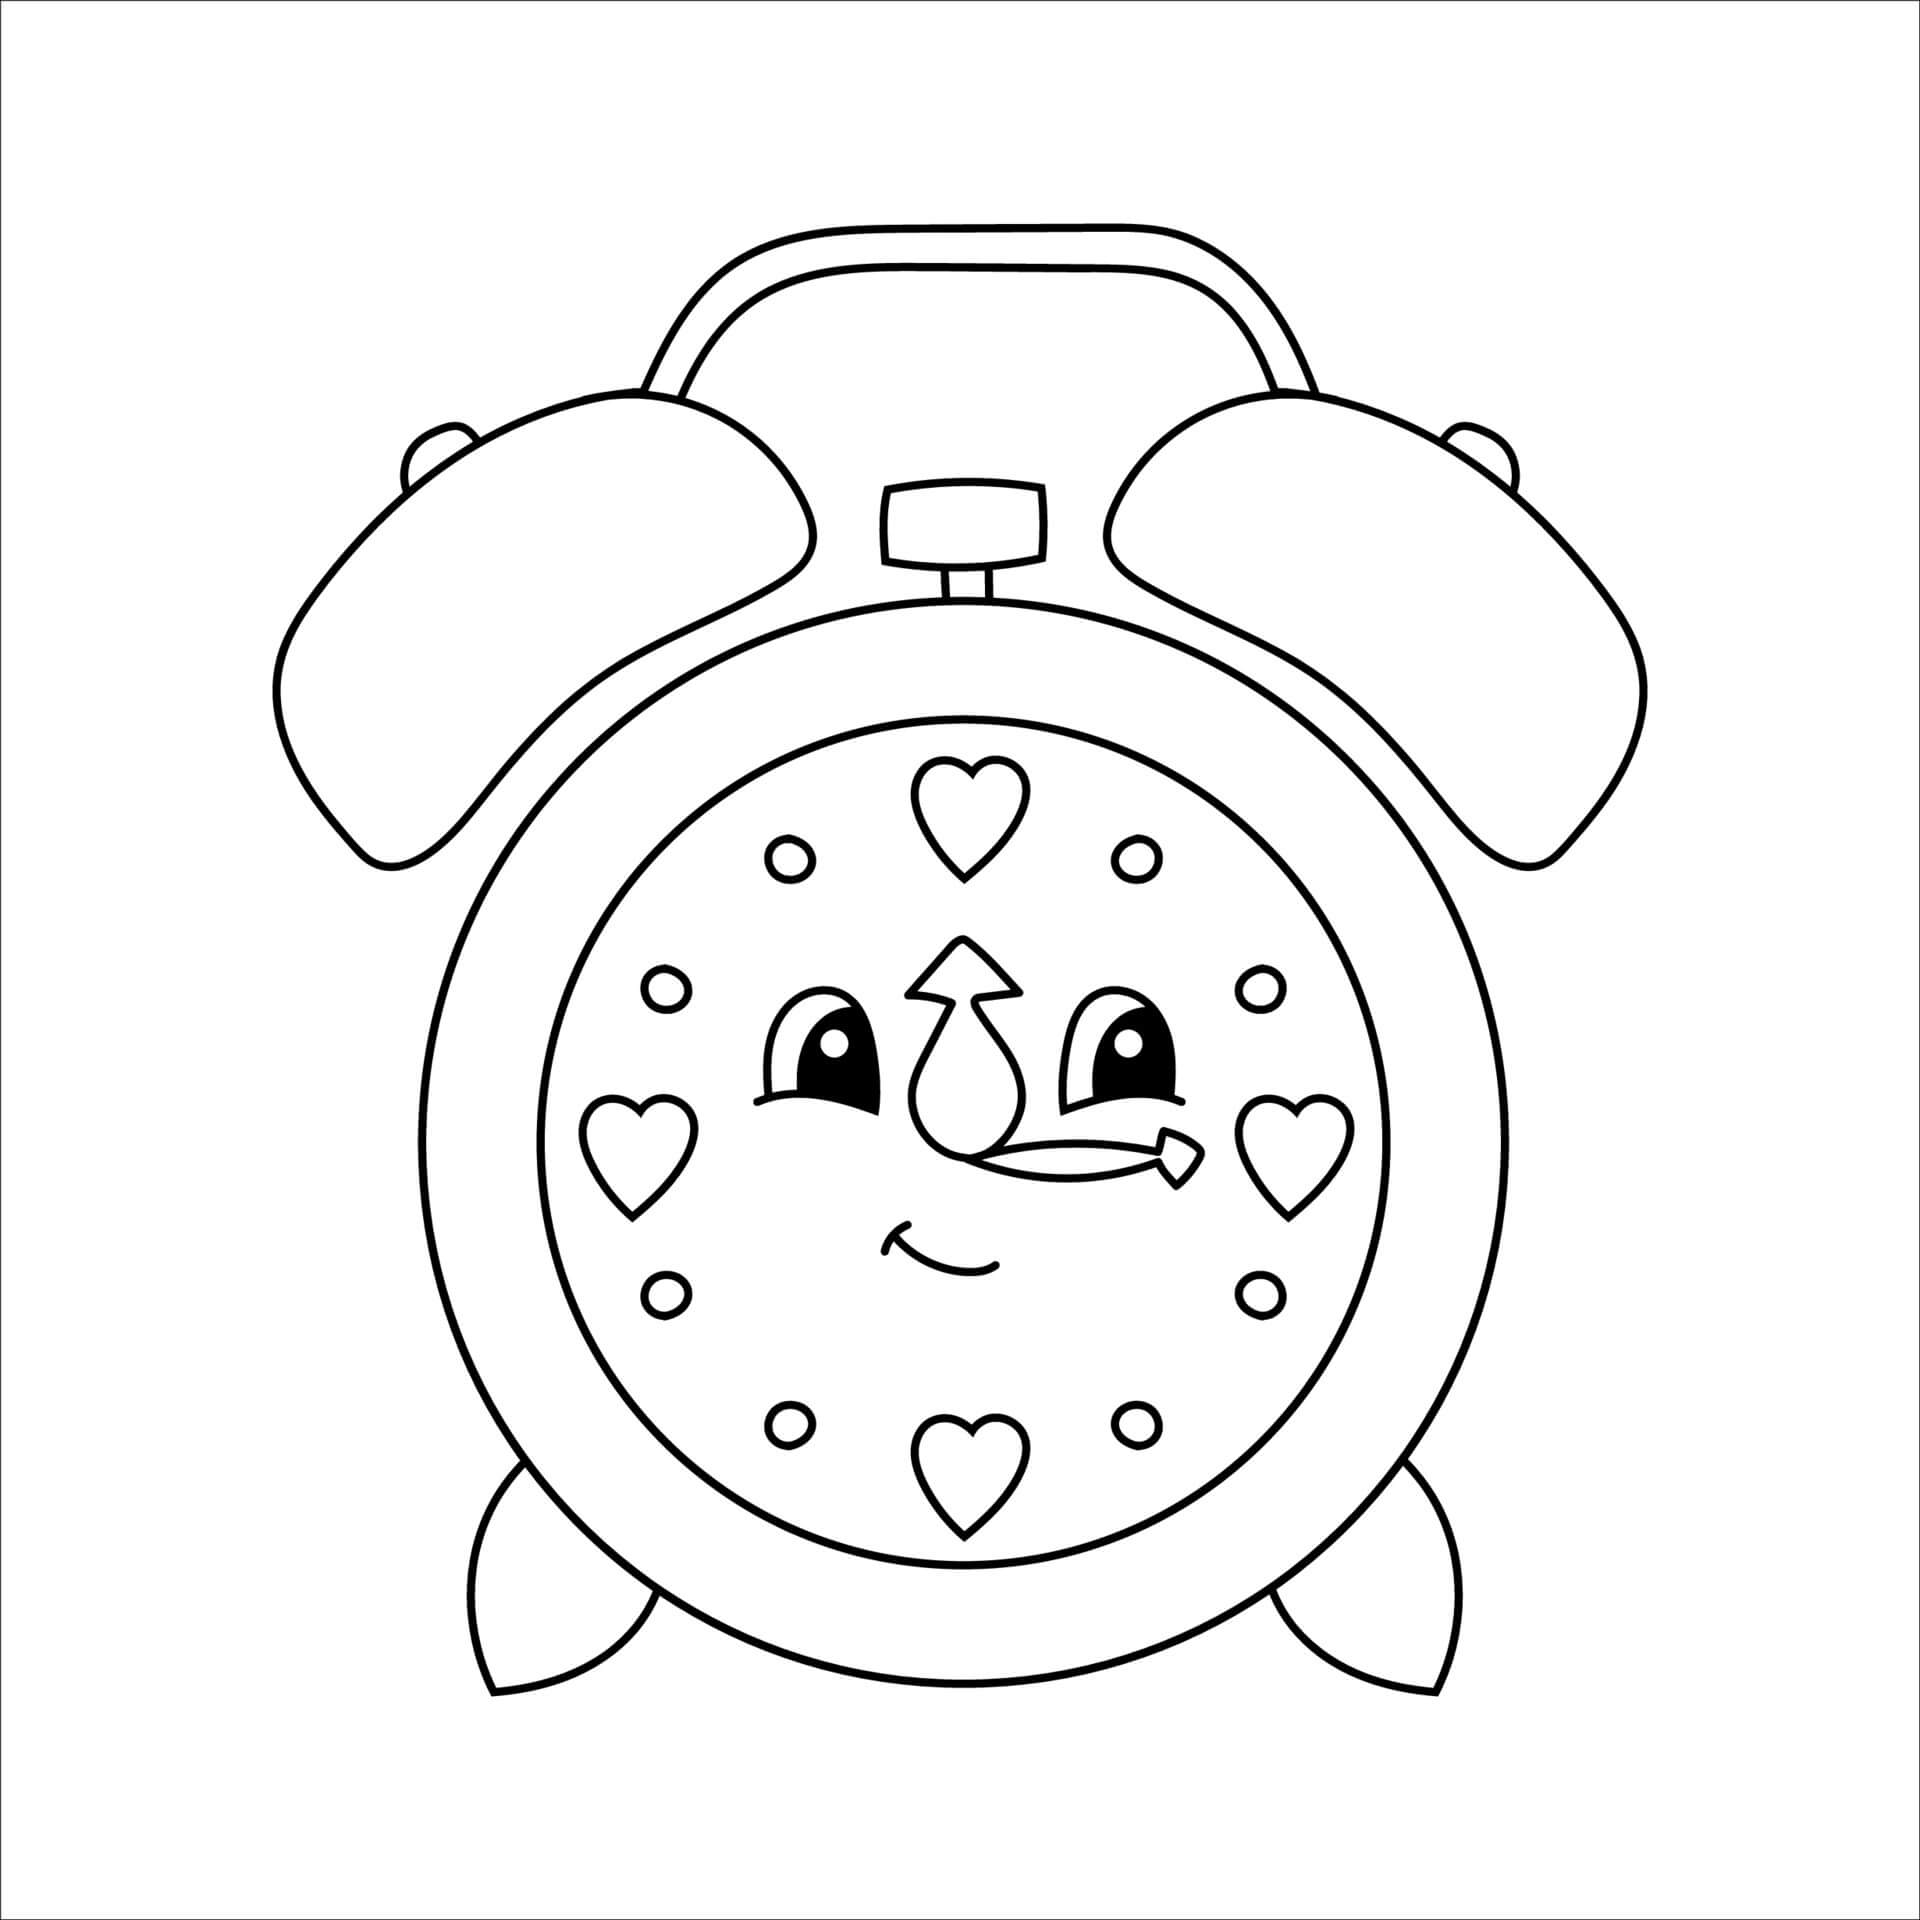 Adorable Horloge coloring page